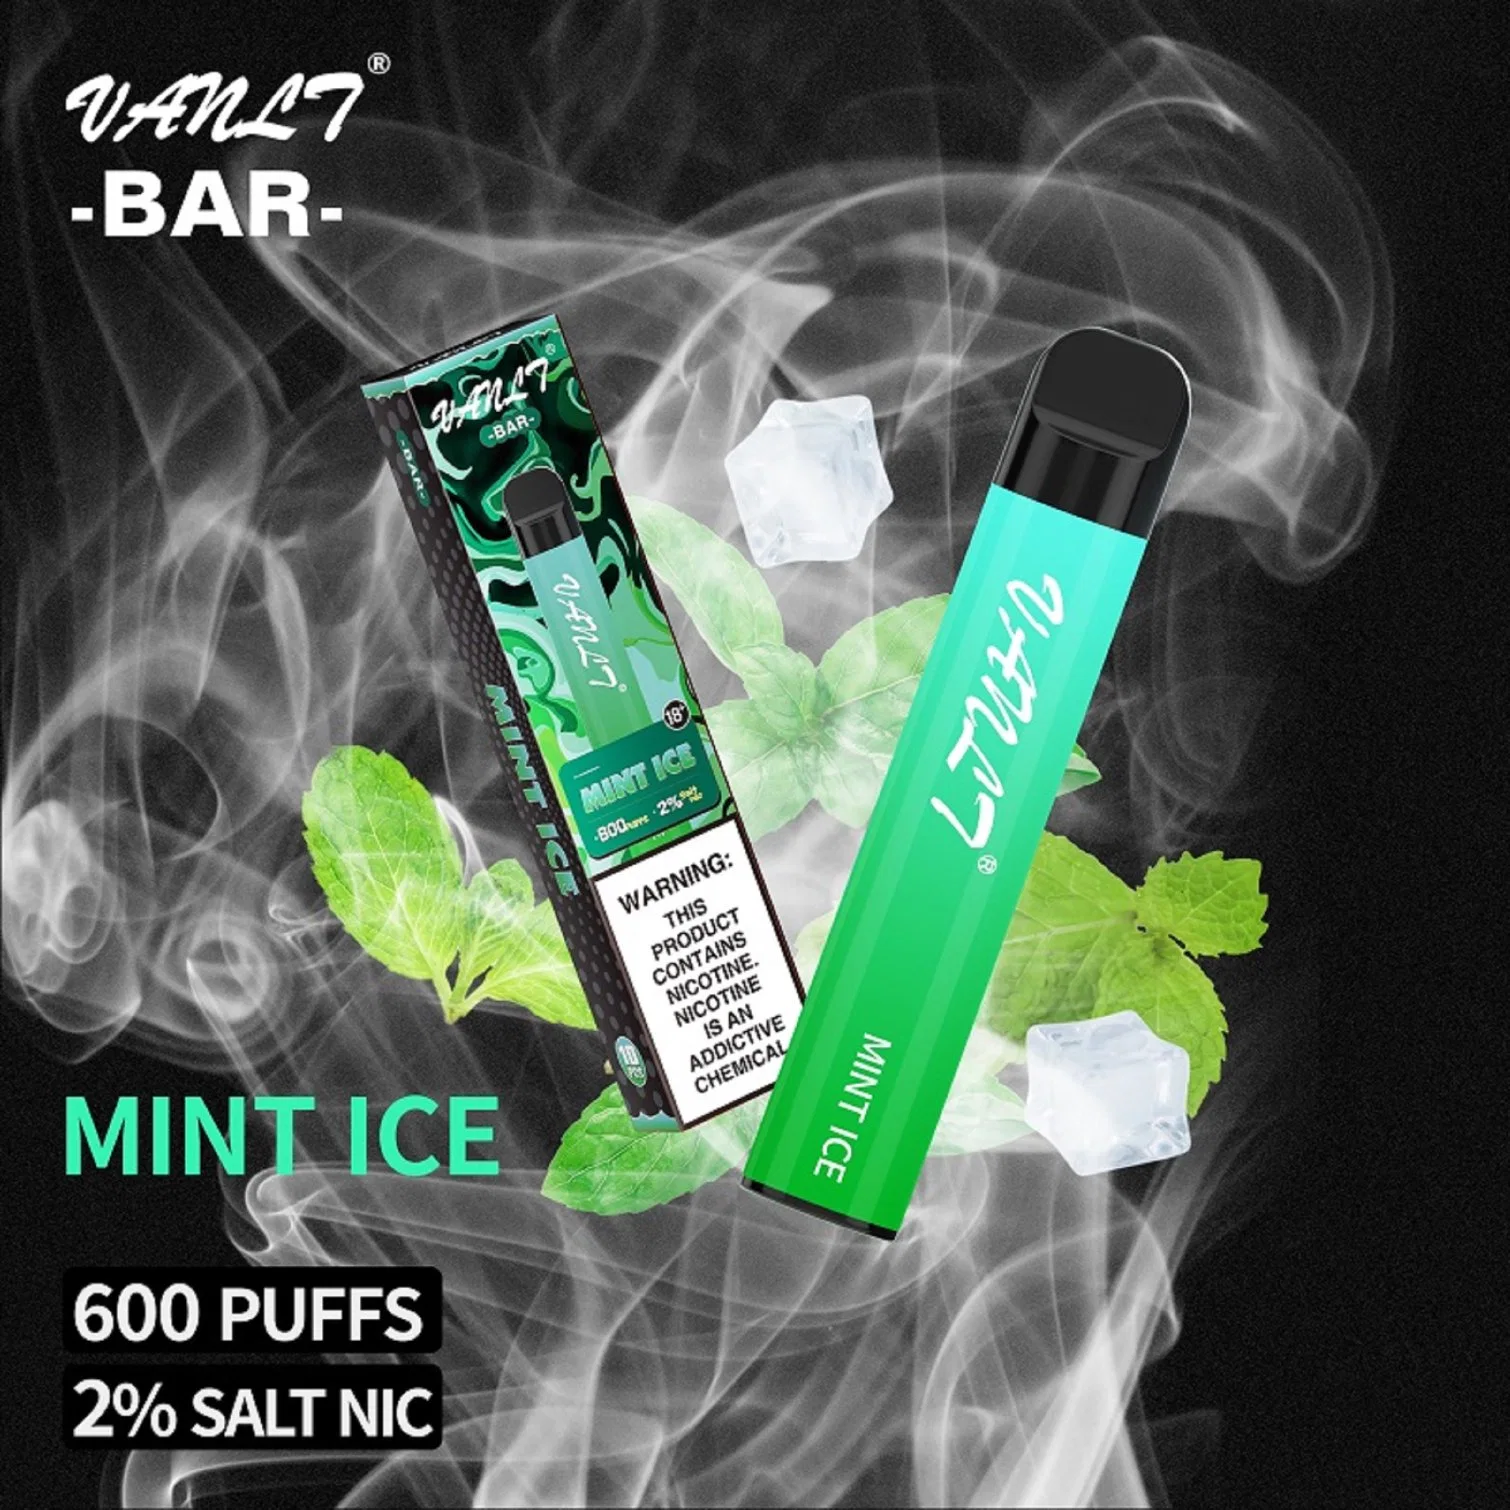 EU Hot 600 Puff Mint Ice Fruit Flavored Disposable/Chargeable Vape Vanlt Elf Mini Bar E Cigarette Factory Directly